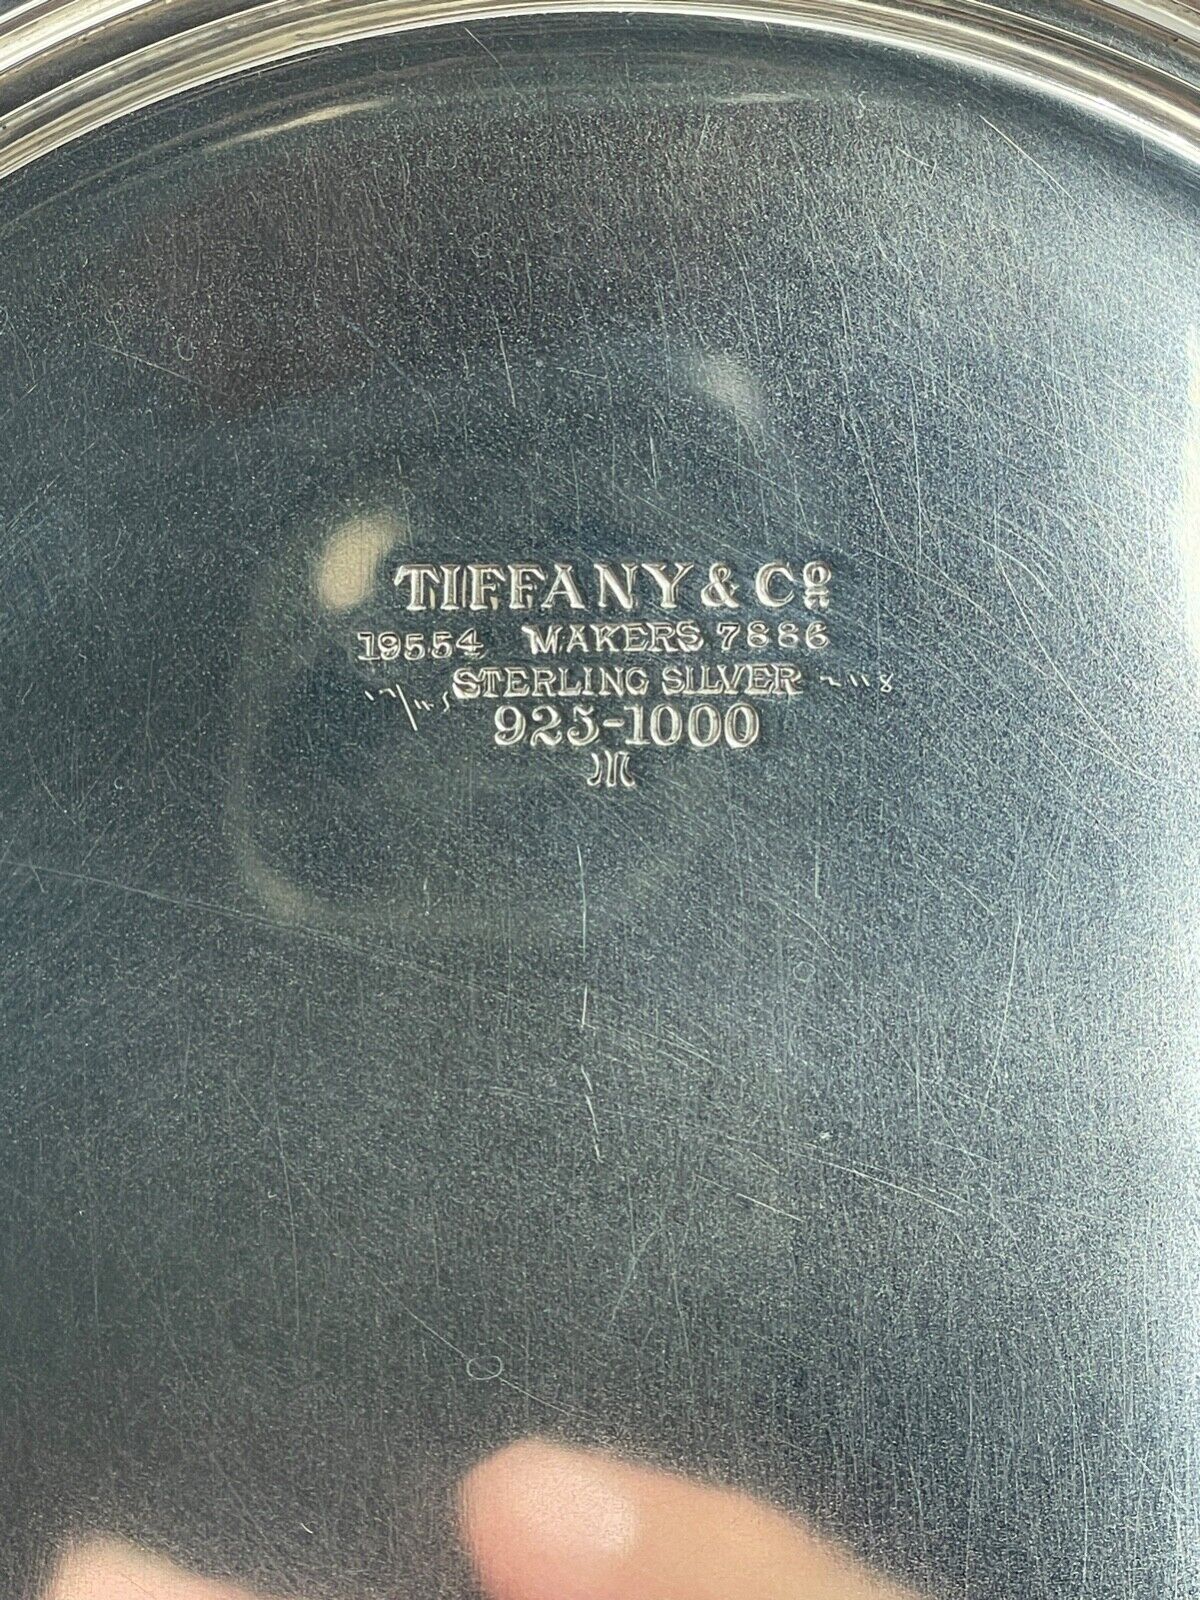 Vintage Tiffany & Co. Makers Sterling Silver 19554 Tray platter John C. Moore II